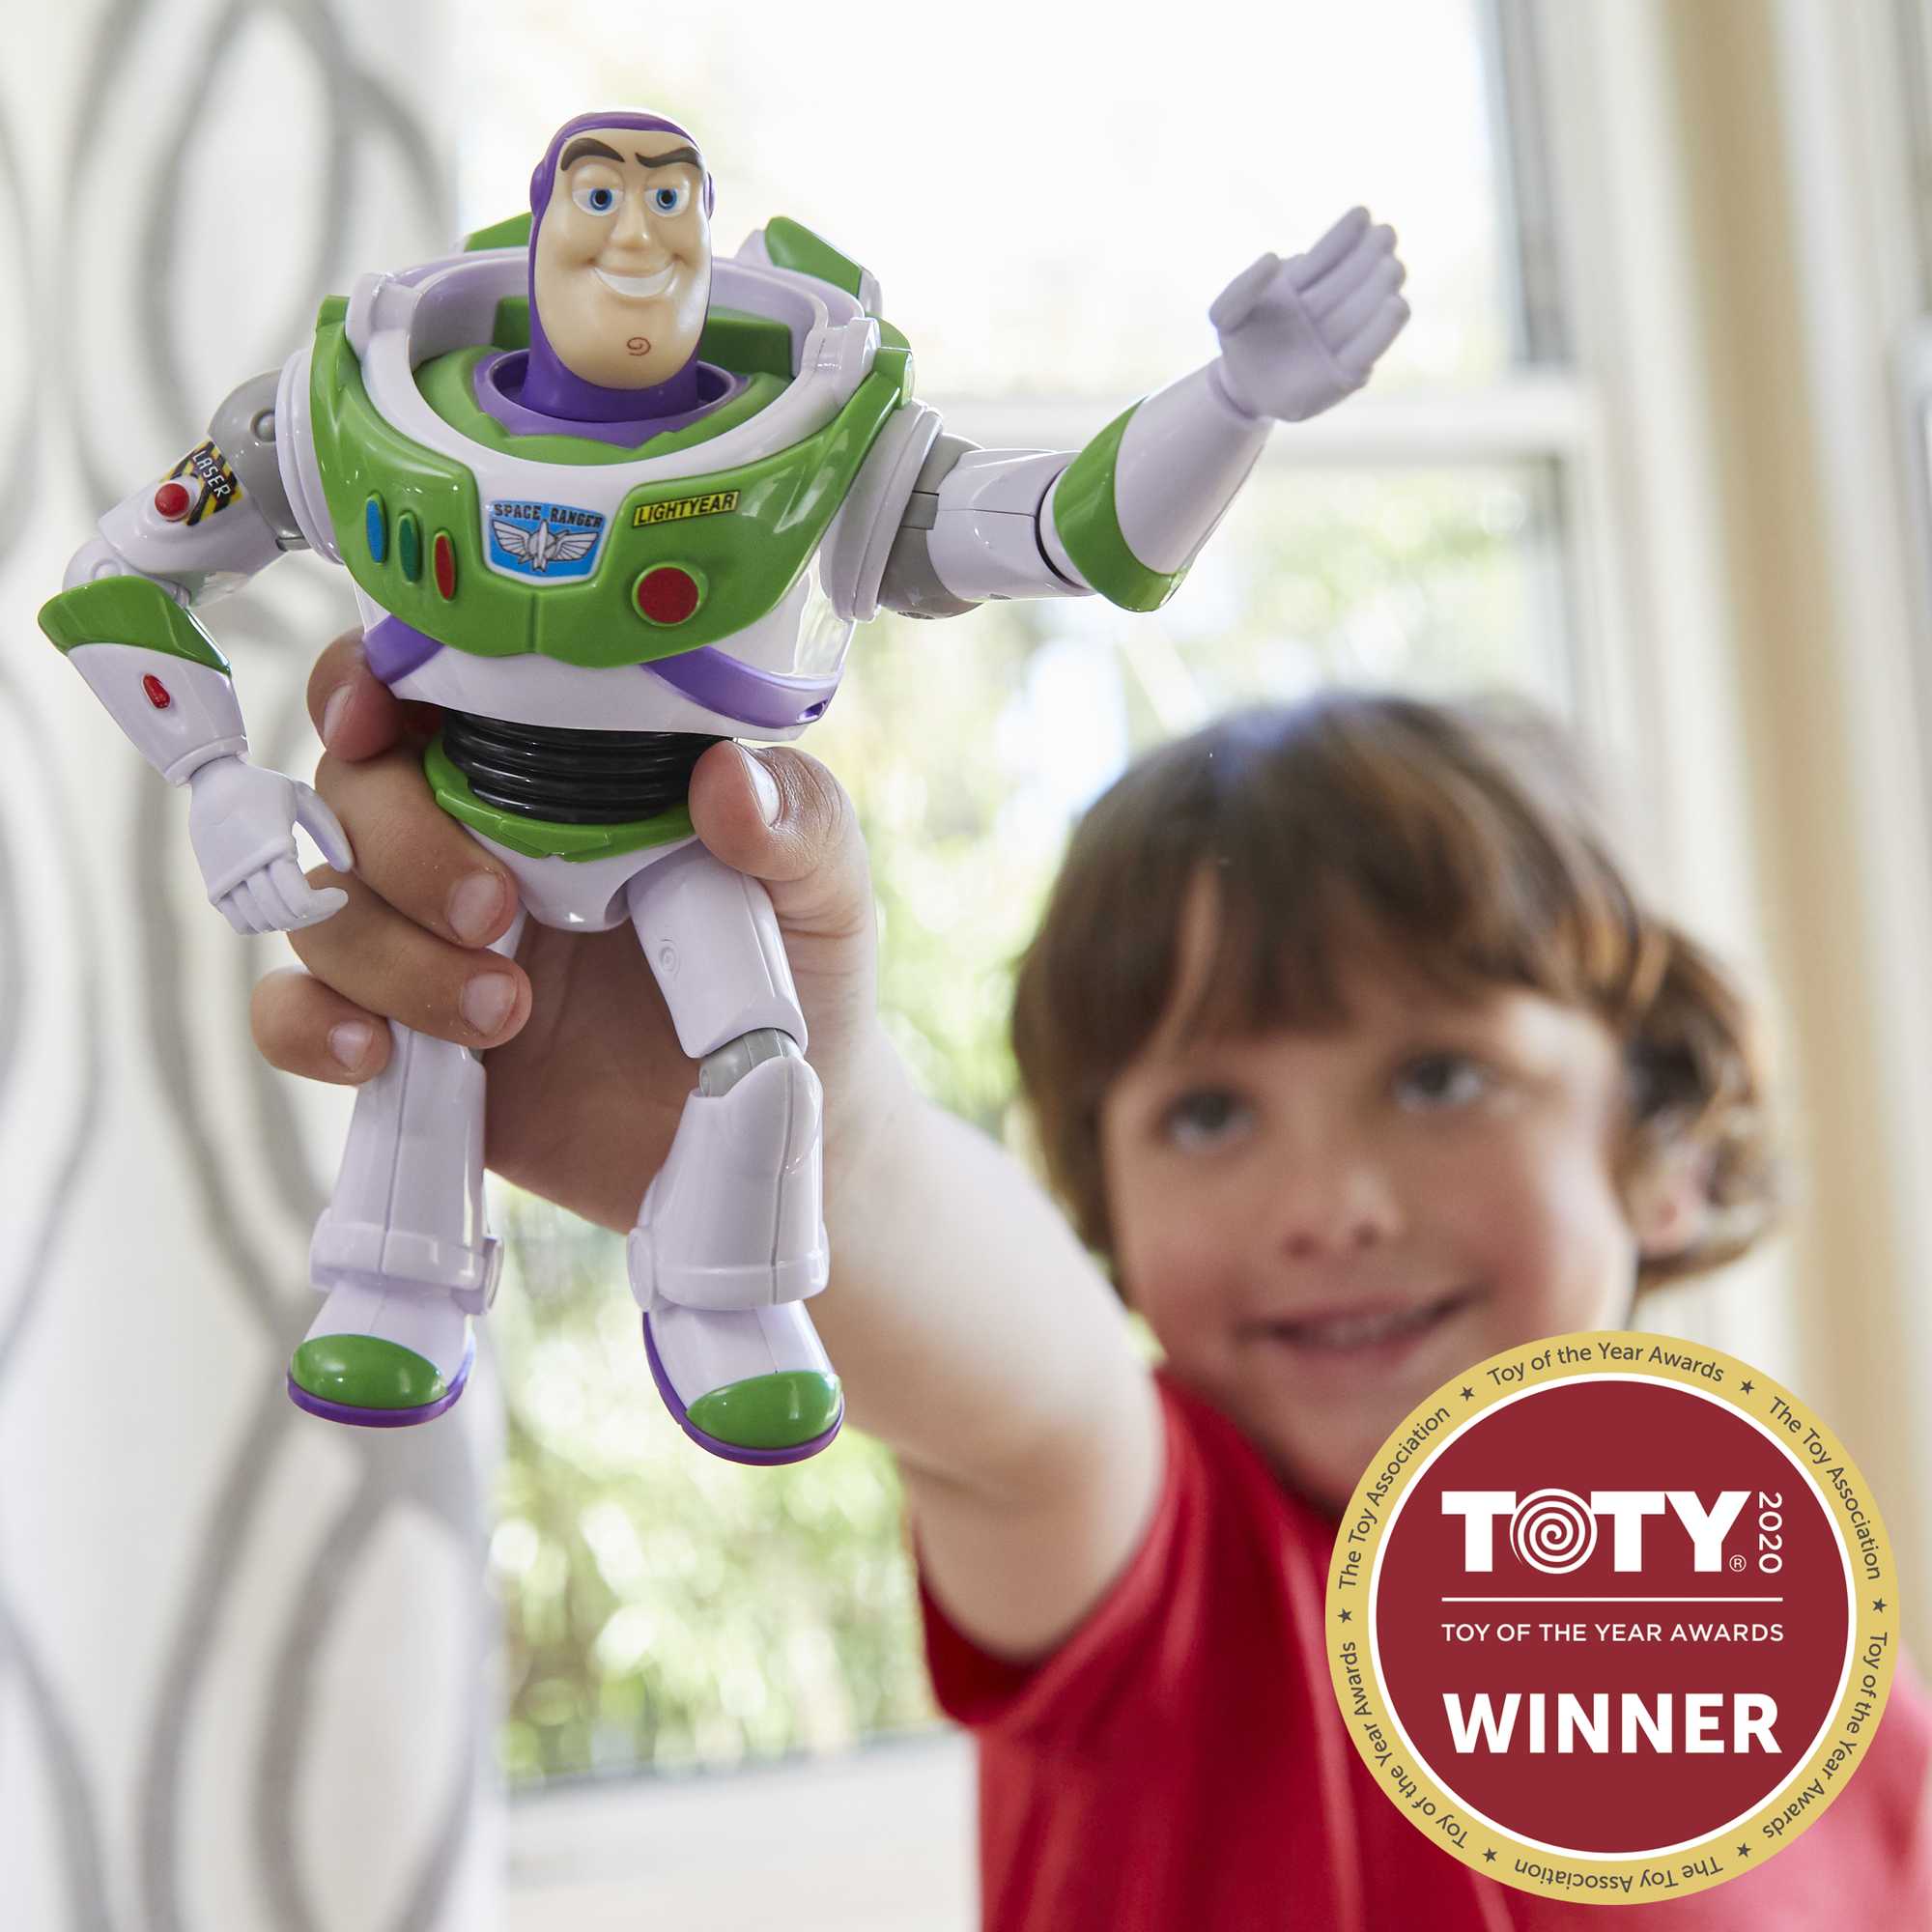 Disney Pixar Toy Story Buzz Lightyear Action Figure - image 2 of 6